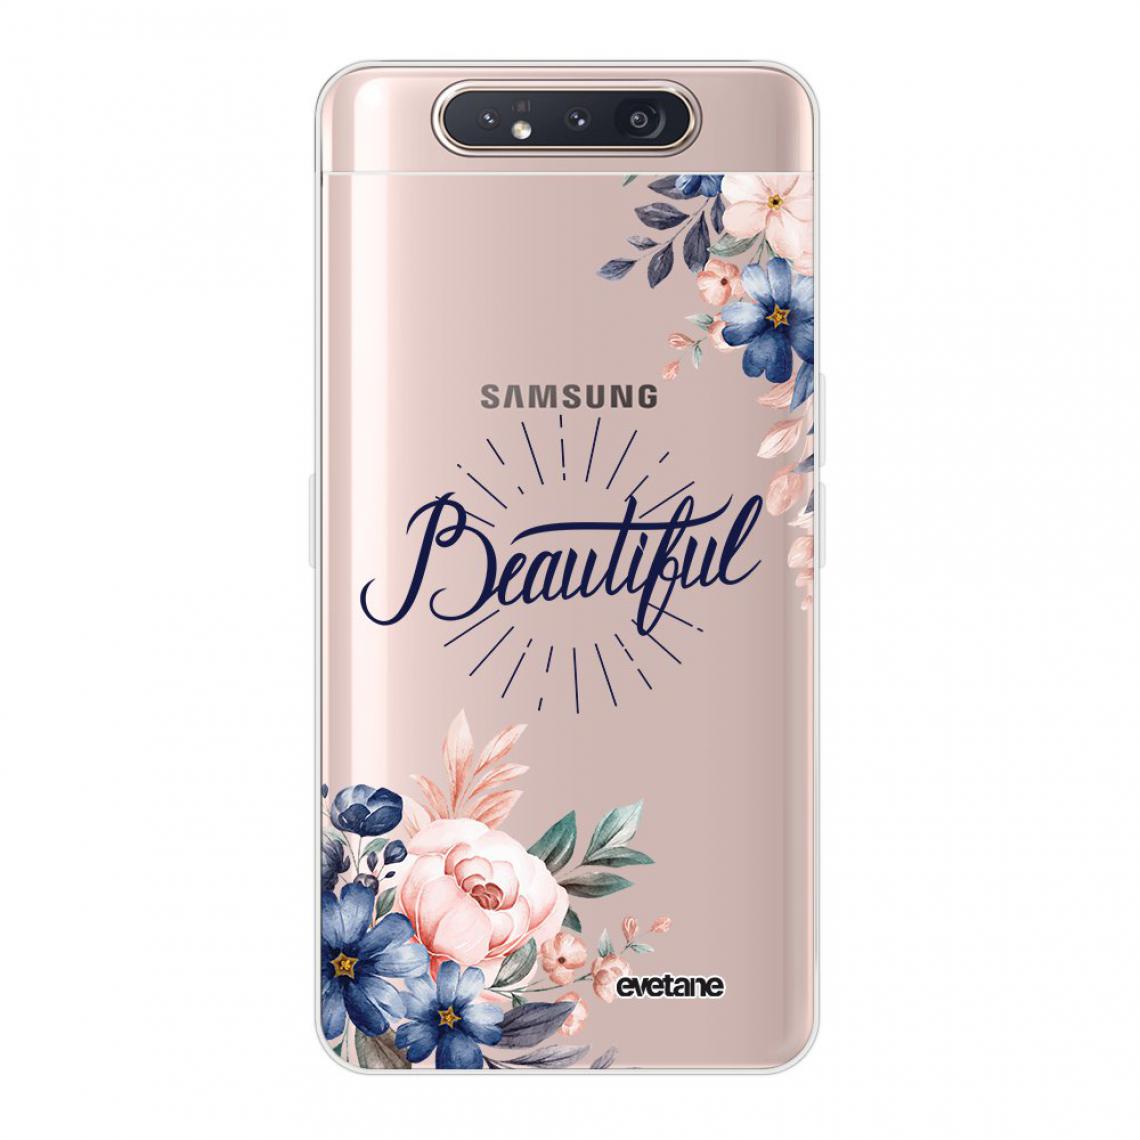 Evetane - Coque Samsung Galaxy A80 360 intégrale avant arrière transparente - Coque, étui smartphone